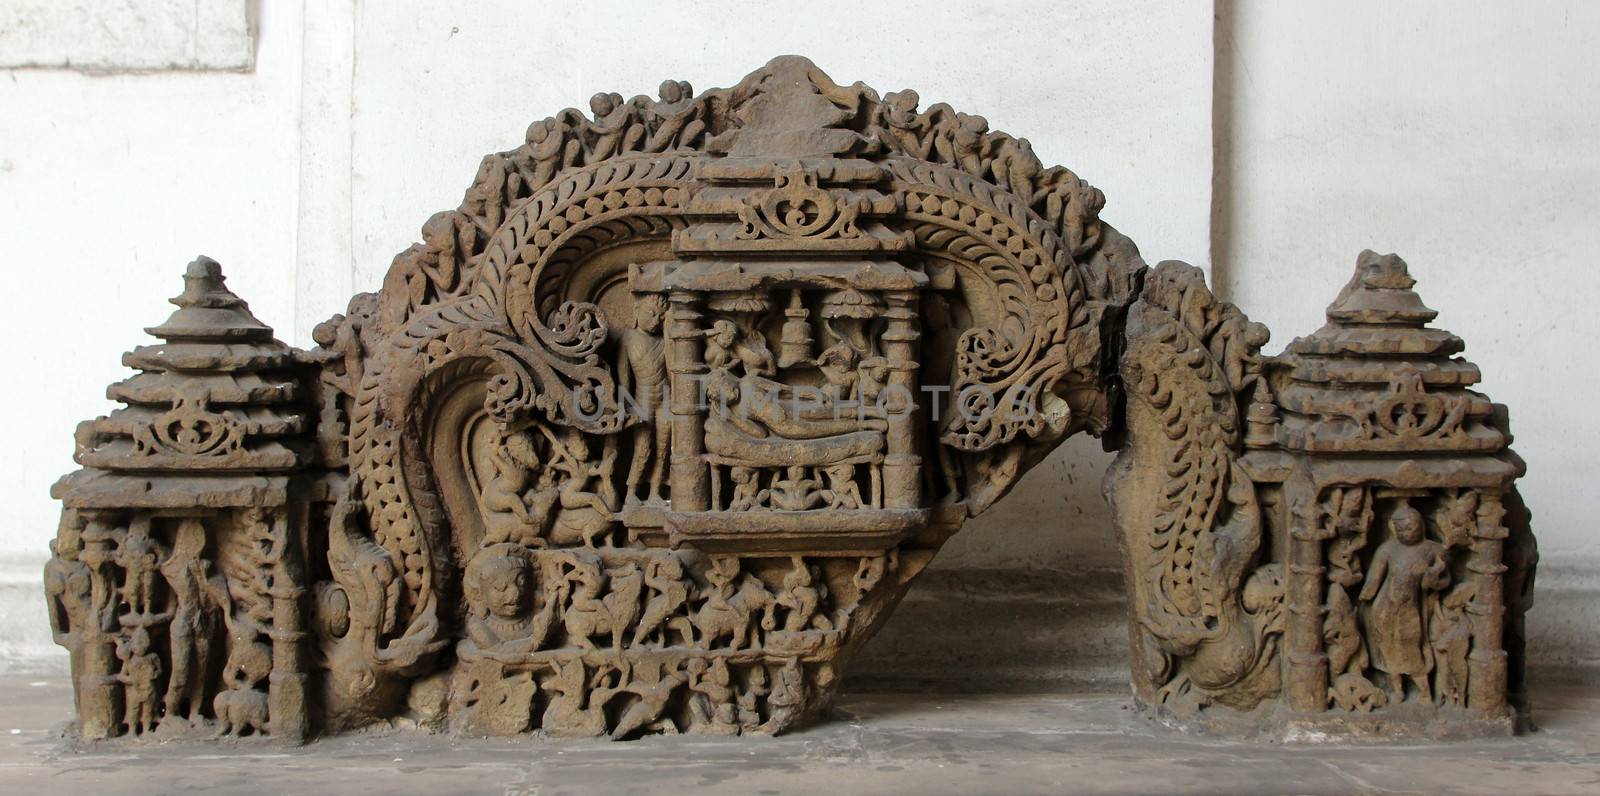 Surya within niche, from 10th century found in Benaras, Uttar Pradesh now exposed in the Indian Museum in Kolkata, on Nov 24, 2012